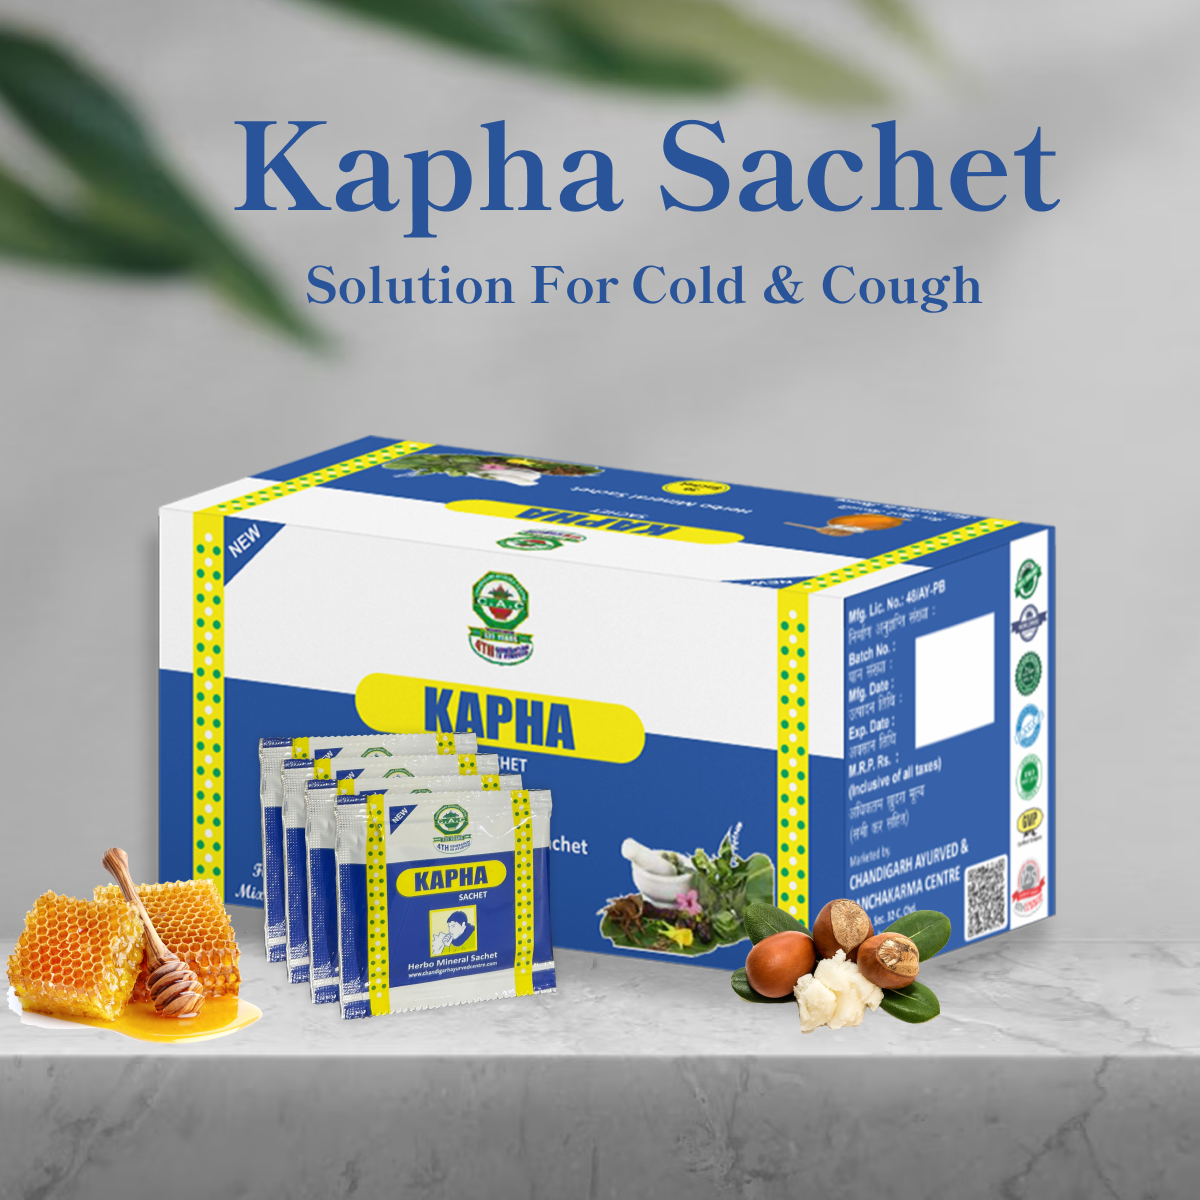 Kapha Sachet